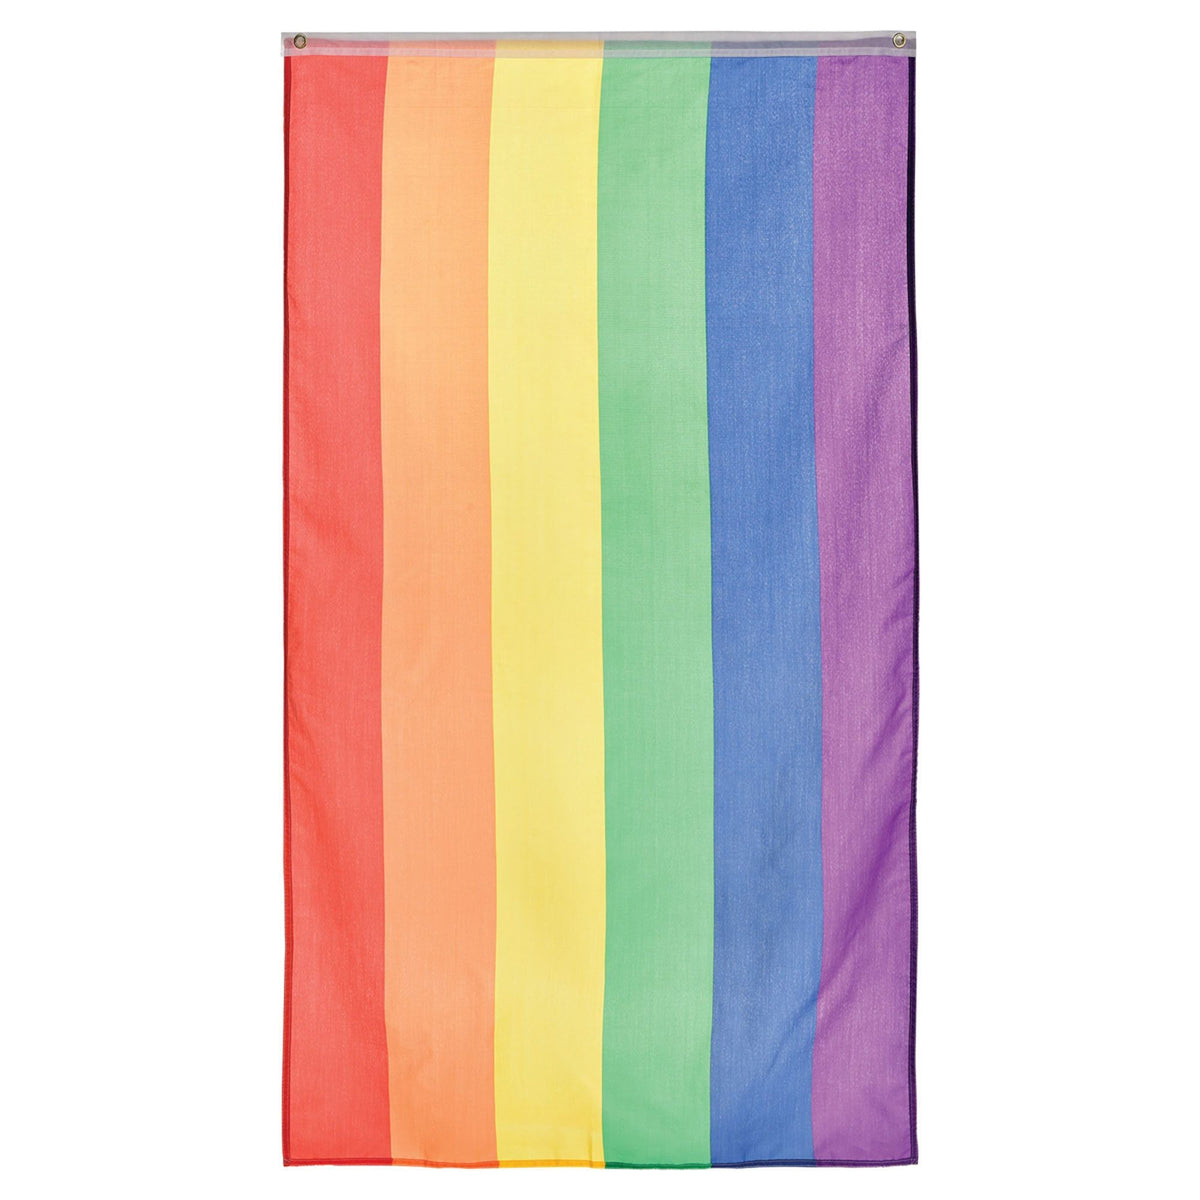 AMSCAN CA Pride Pride Rainbow Flag, 5 x 3 Feet 013051826963